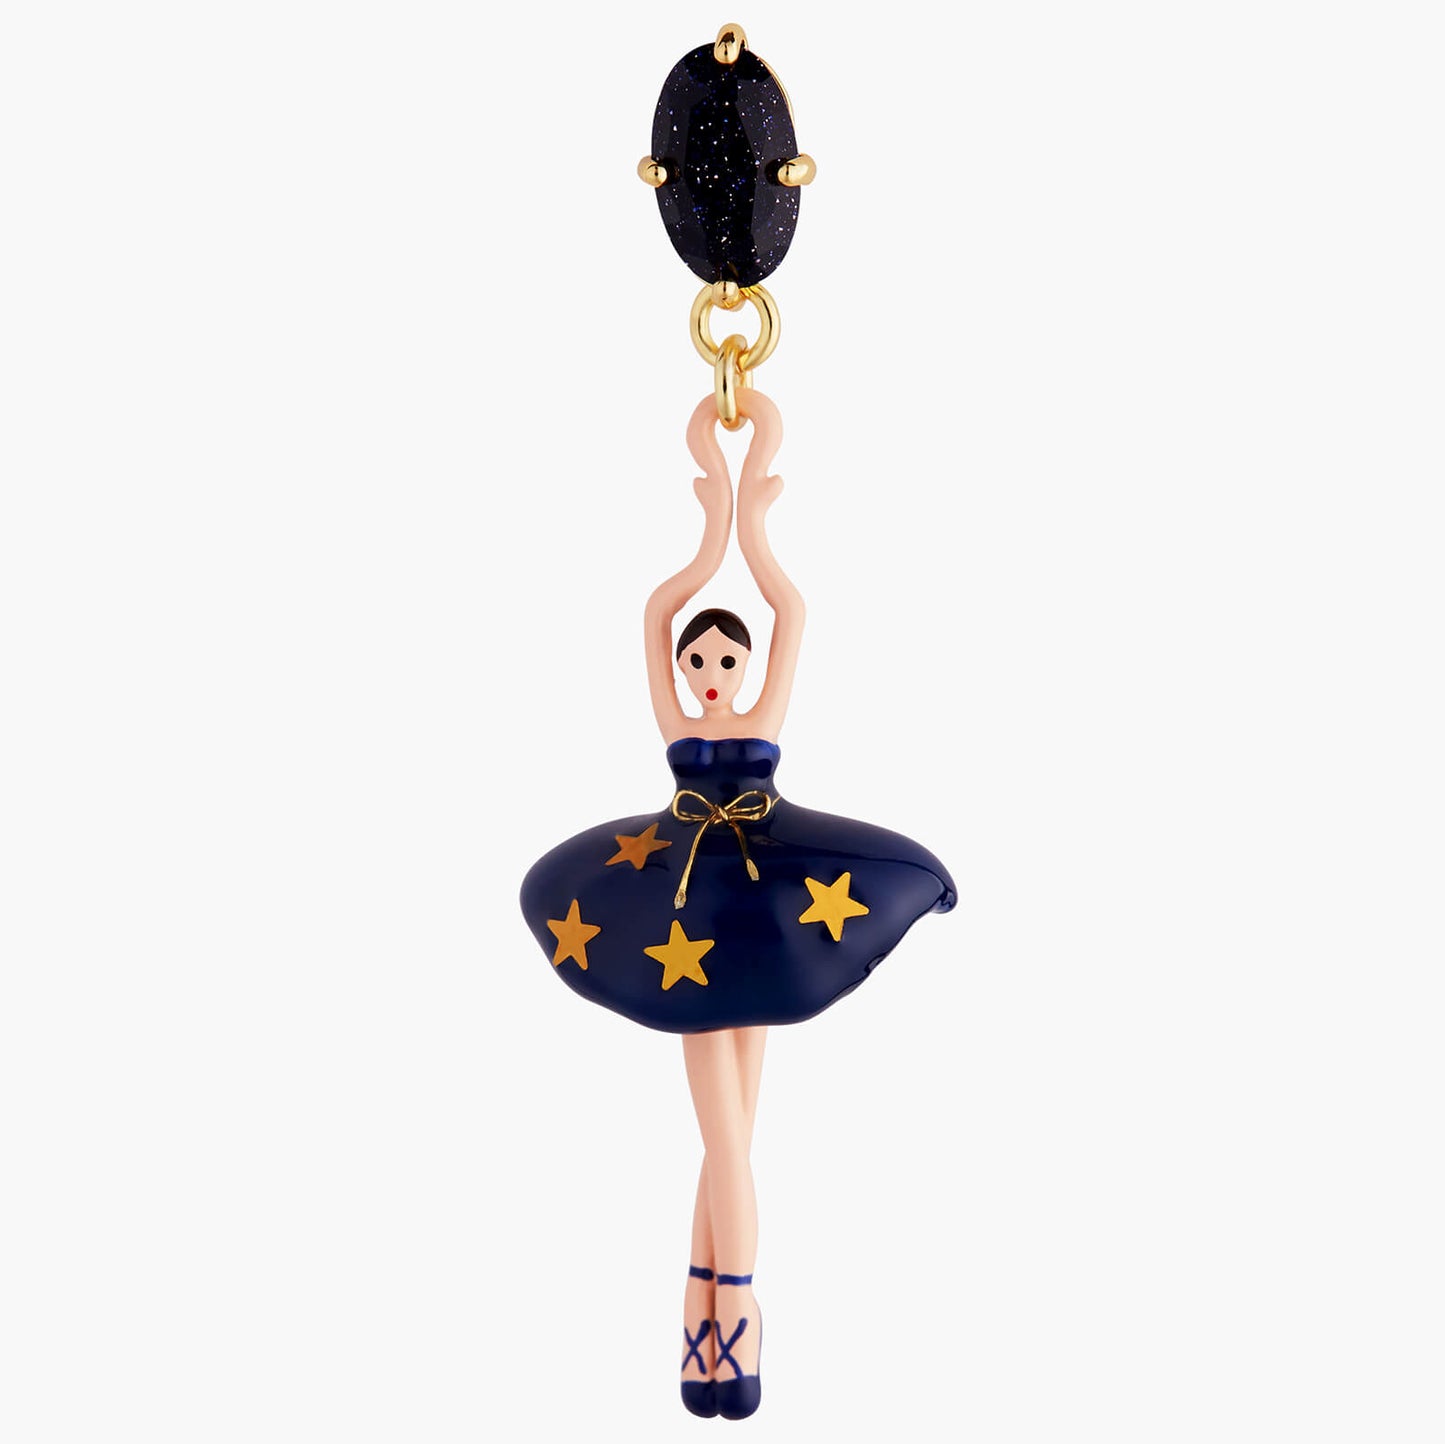 Constellation Ballerina Earrings | AMDD1152